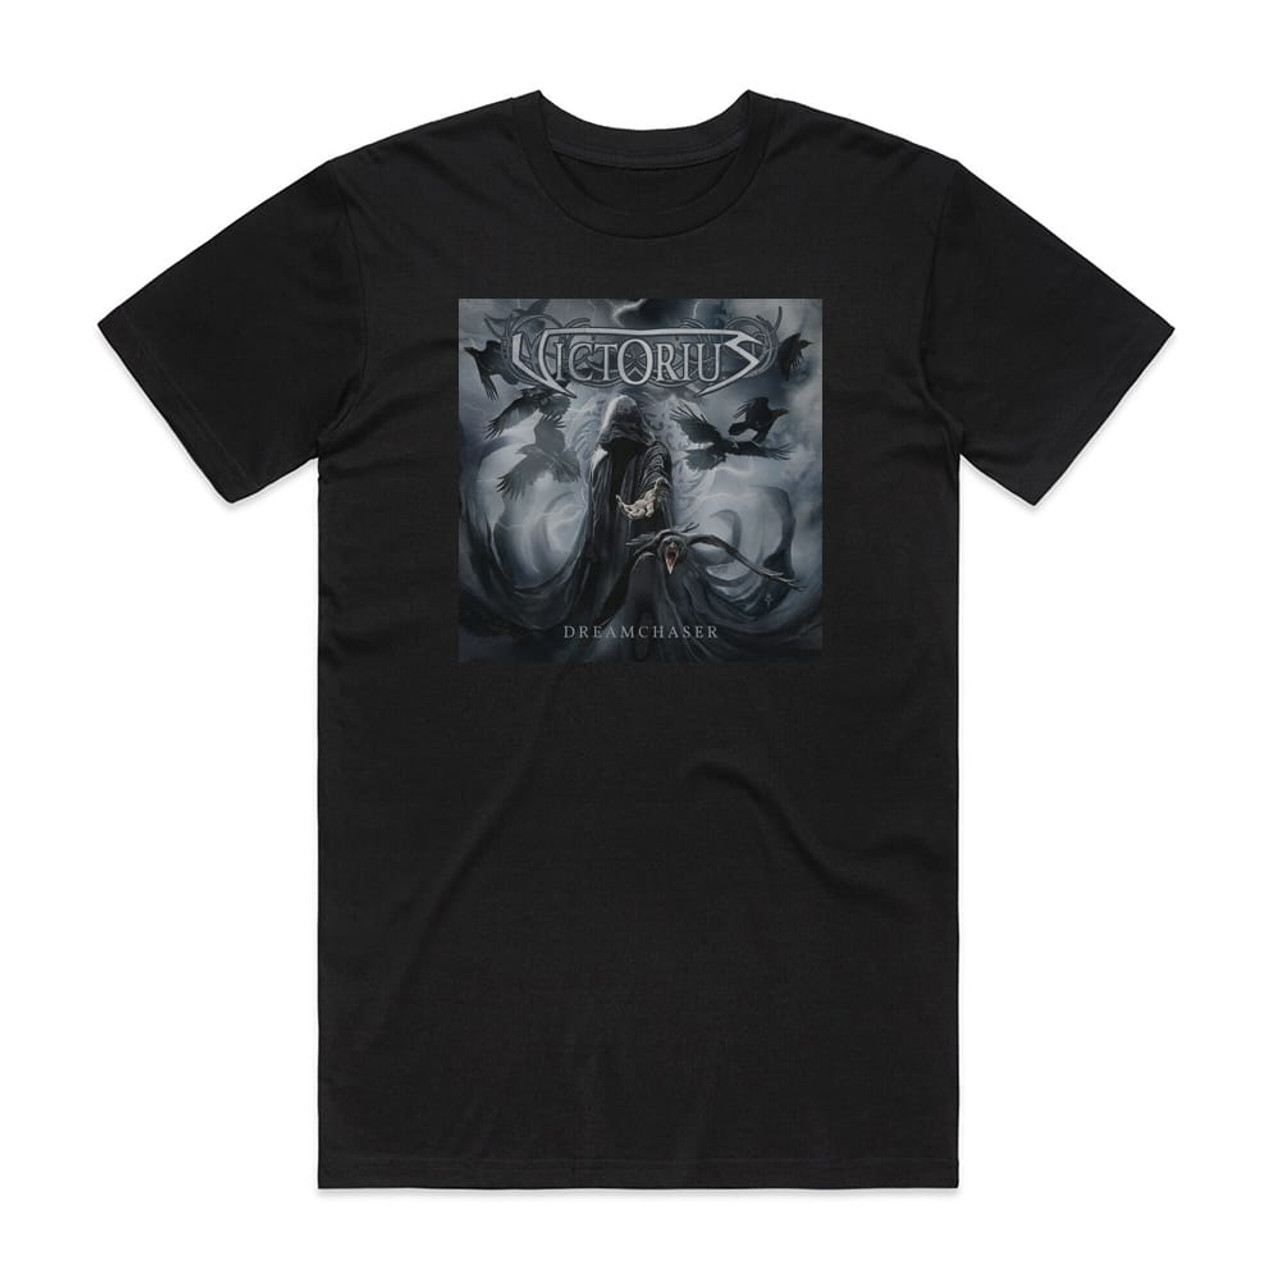 Victorius Dreamchaser Album Cover T-Shirt Black